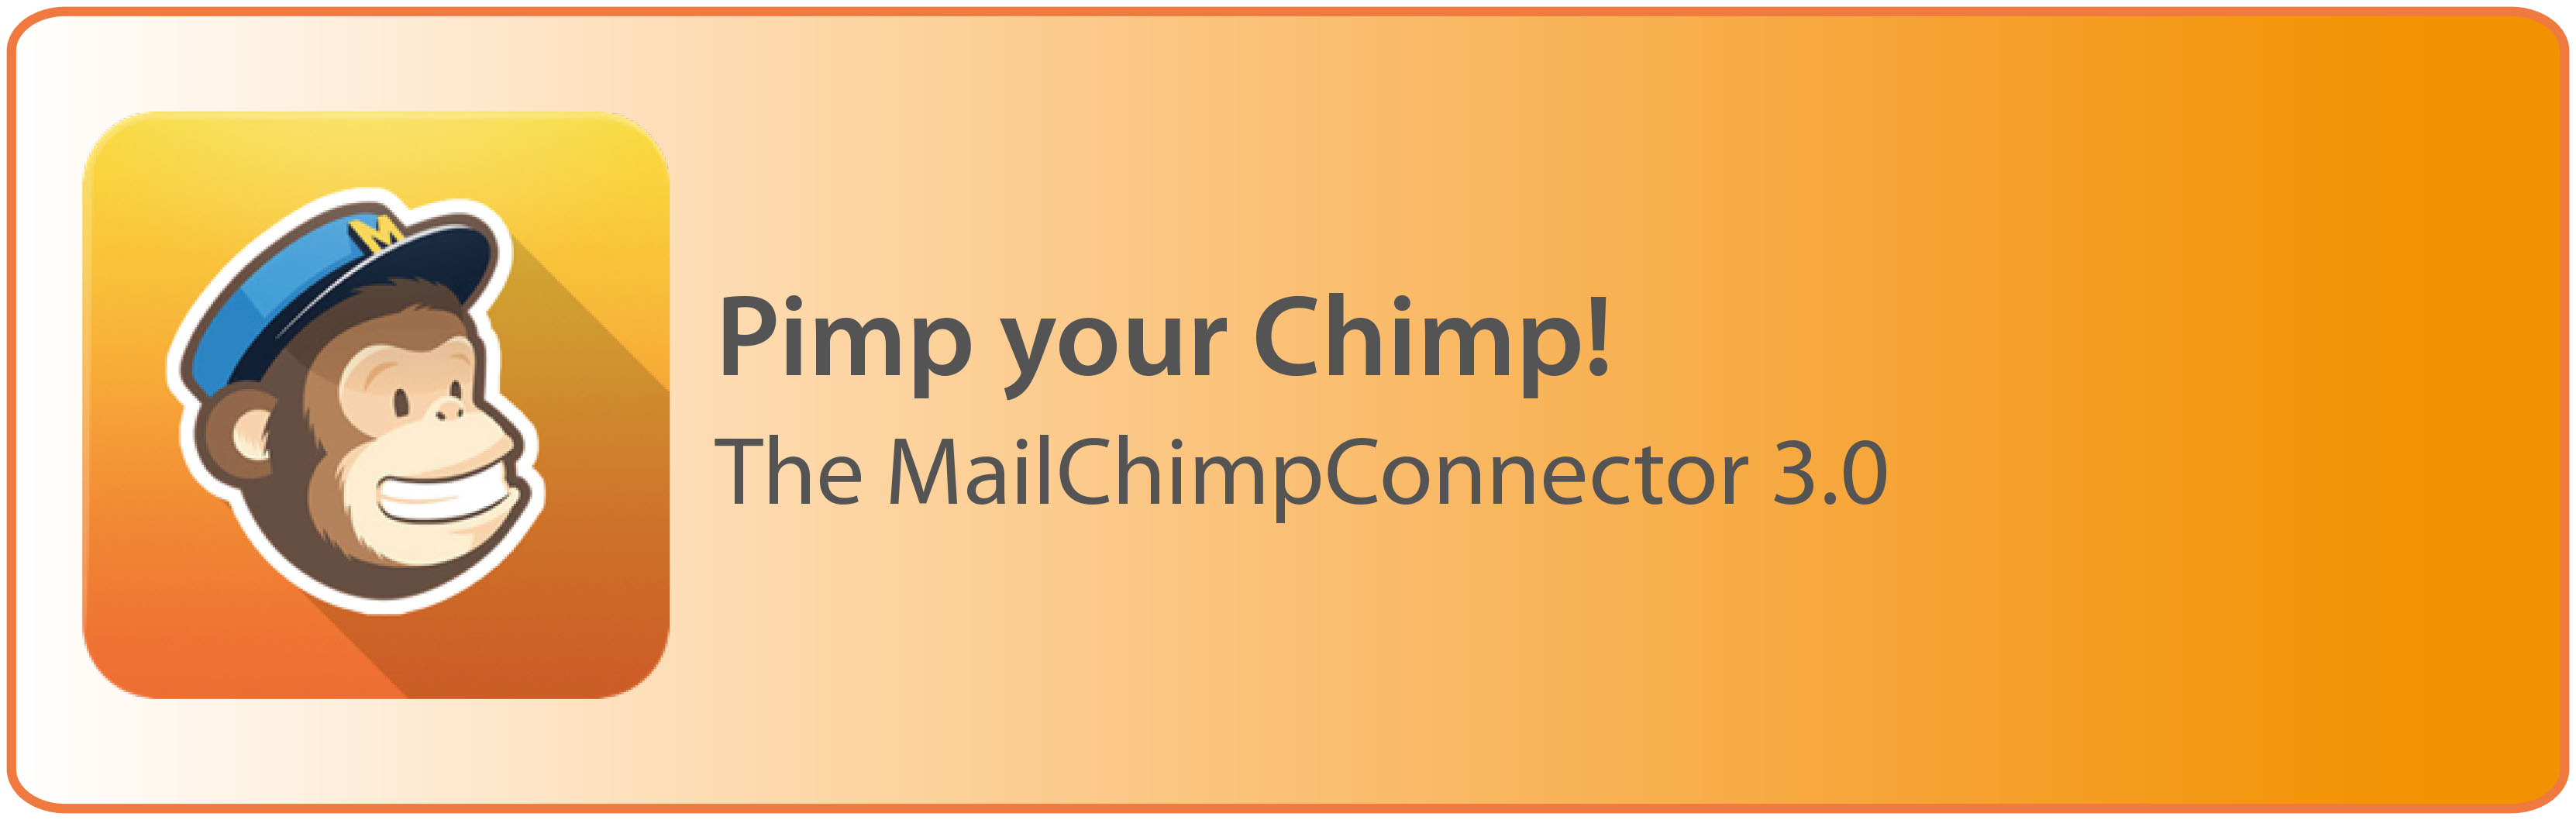 MailChimpConnector 3.0 - Badge